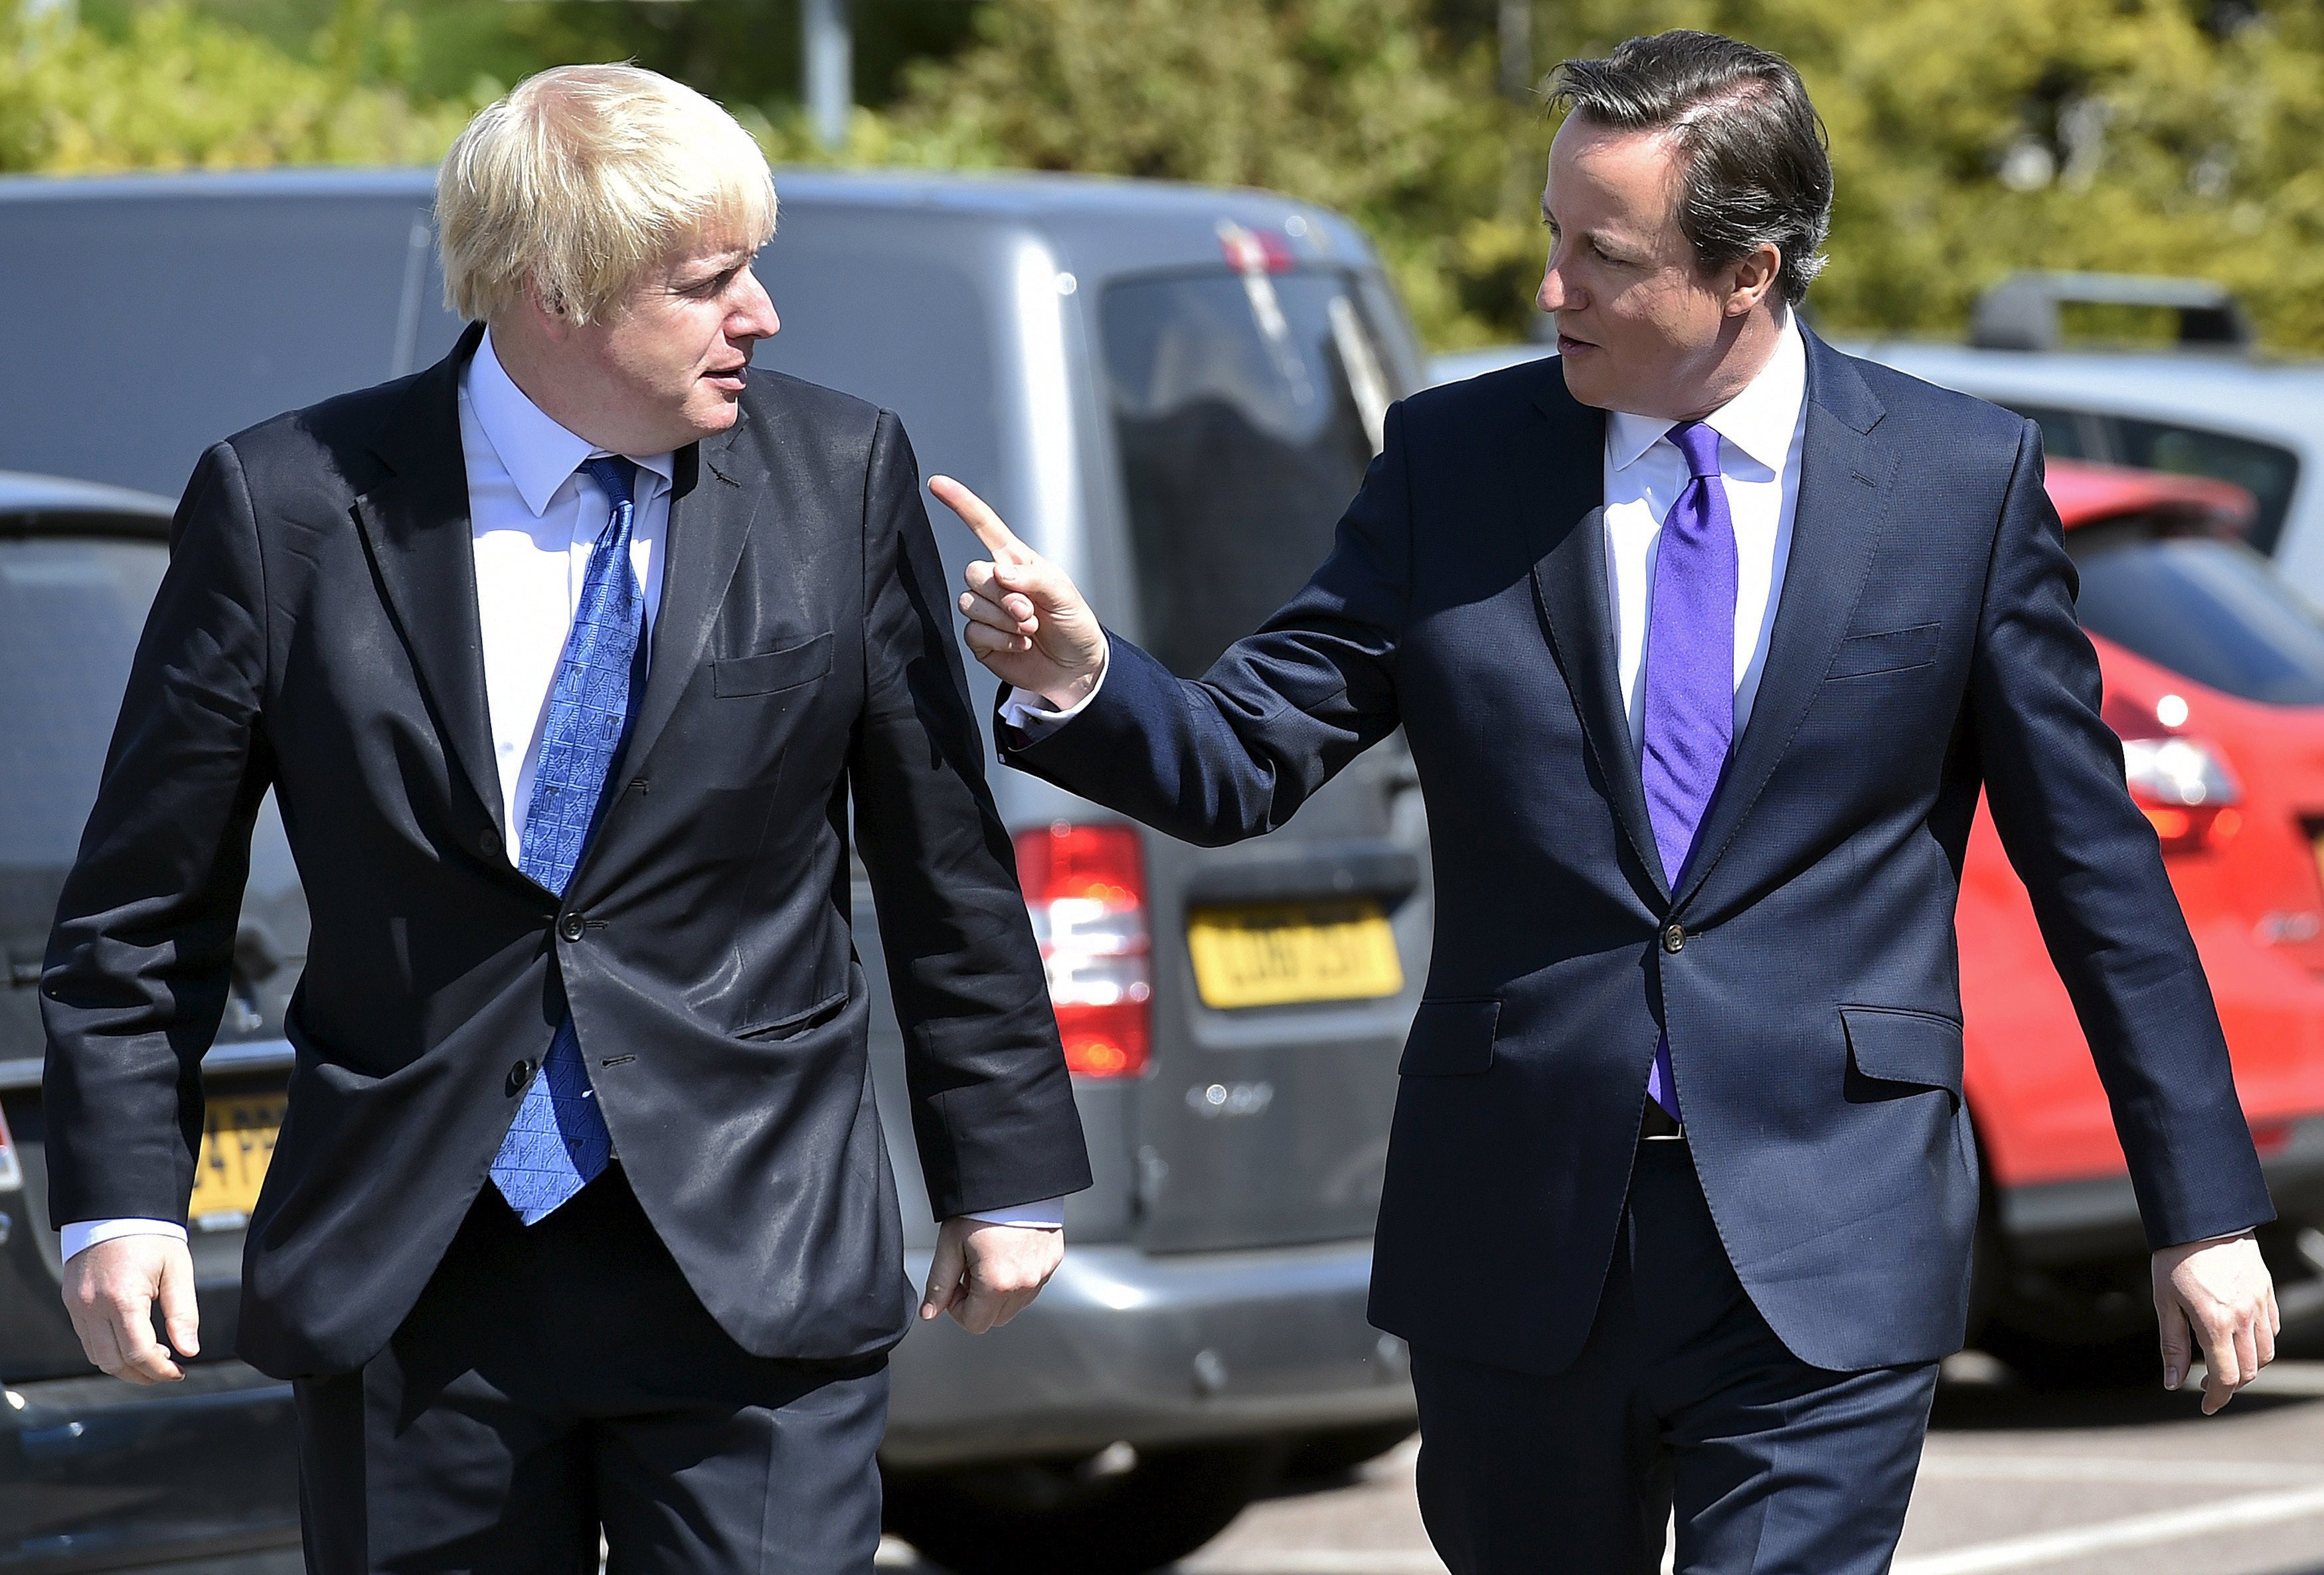 Then London mayor Boris Johnson and Cameron arrive at the Advantage children’s nursery in 2015